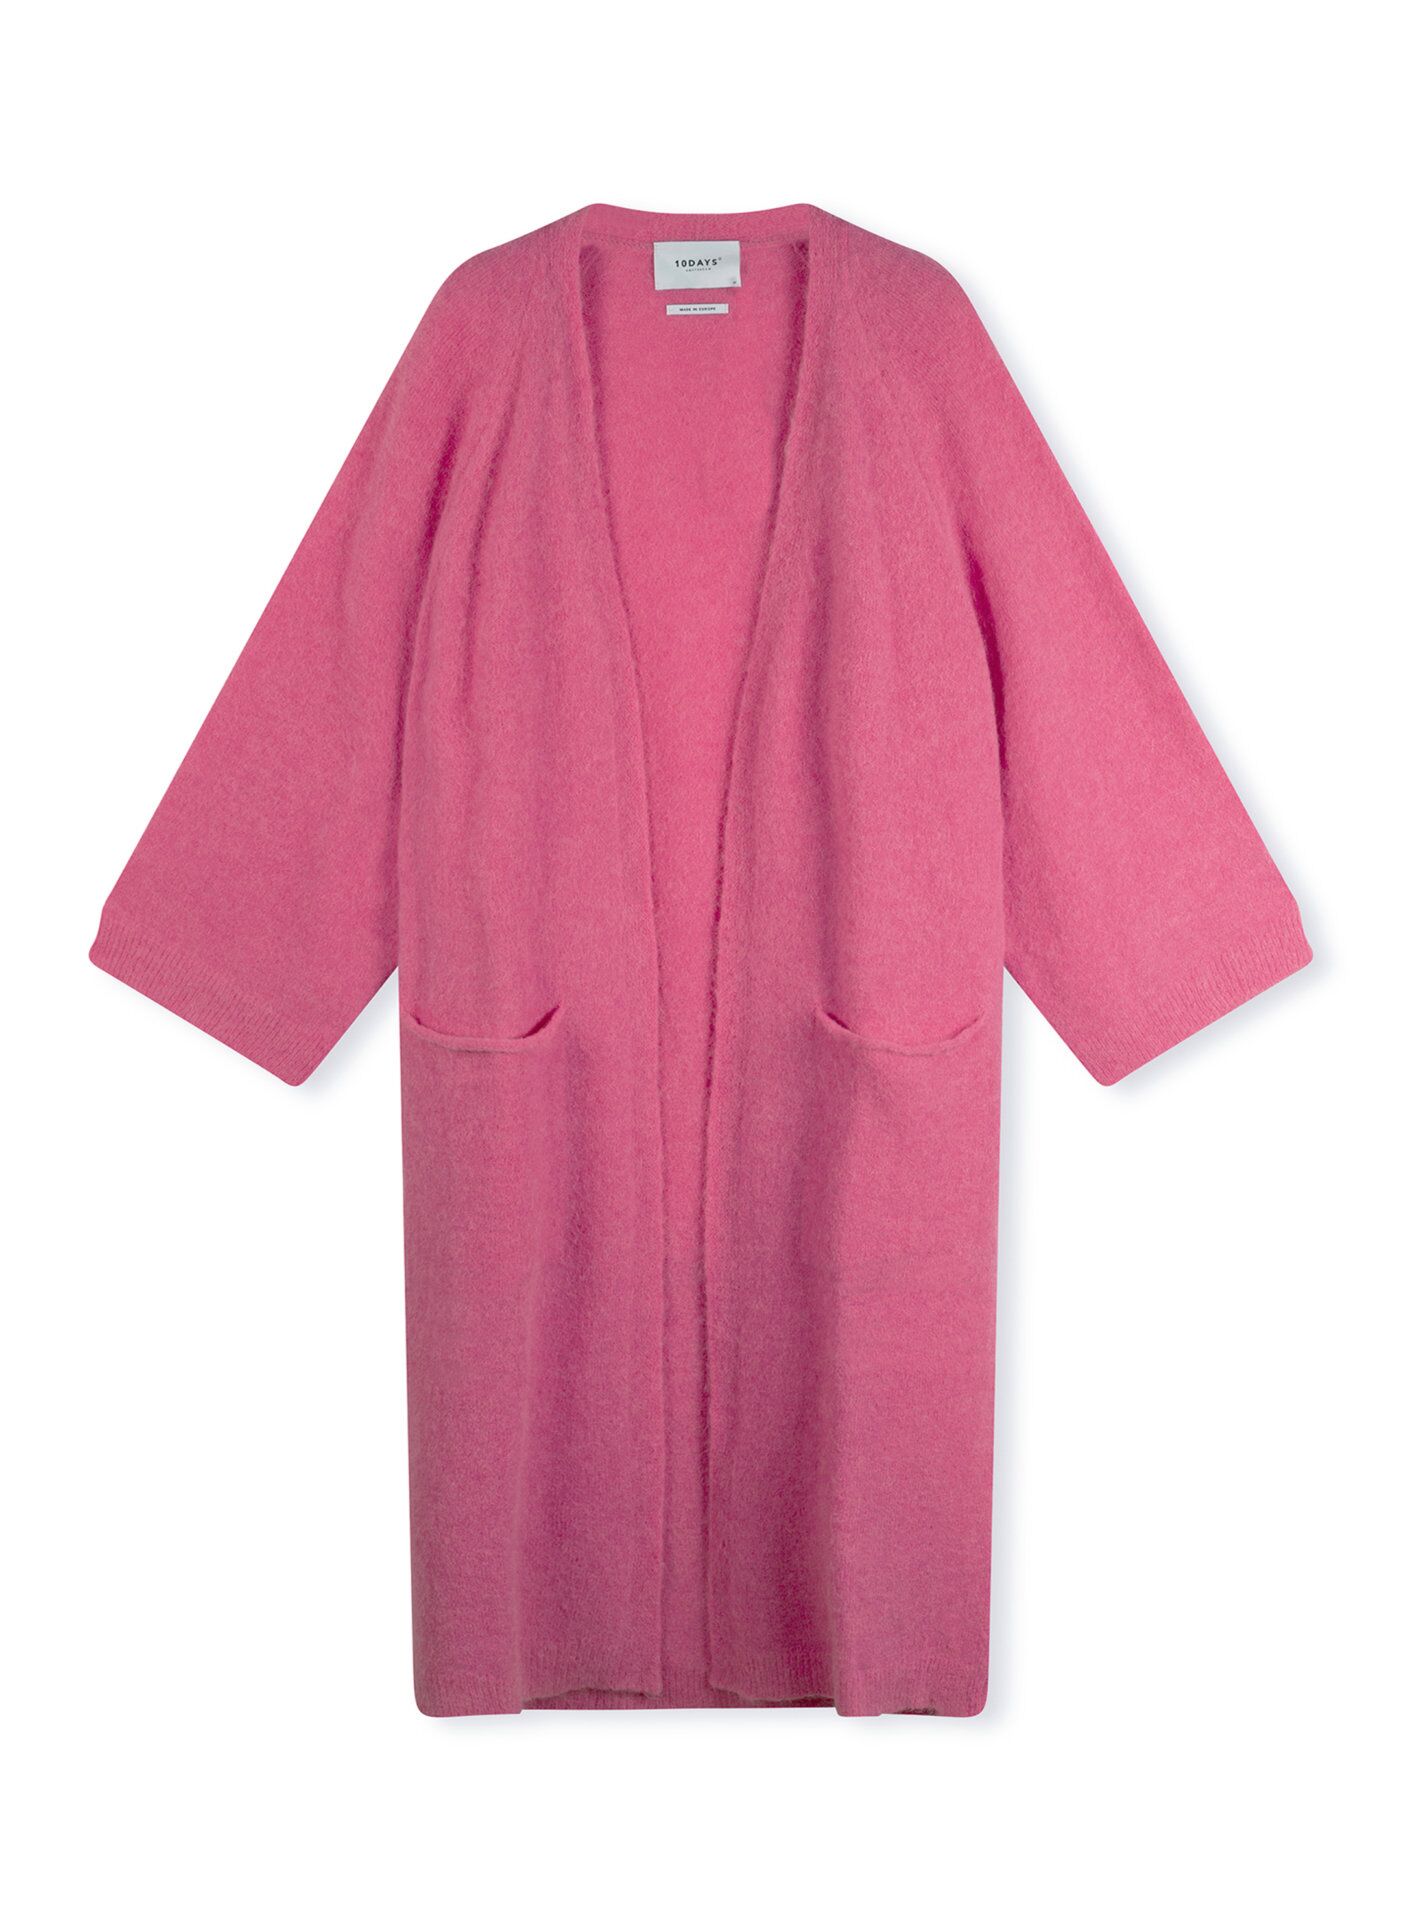 20 652 2204 10days Soft Knit Cardigan Soft Berry Pink (4)